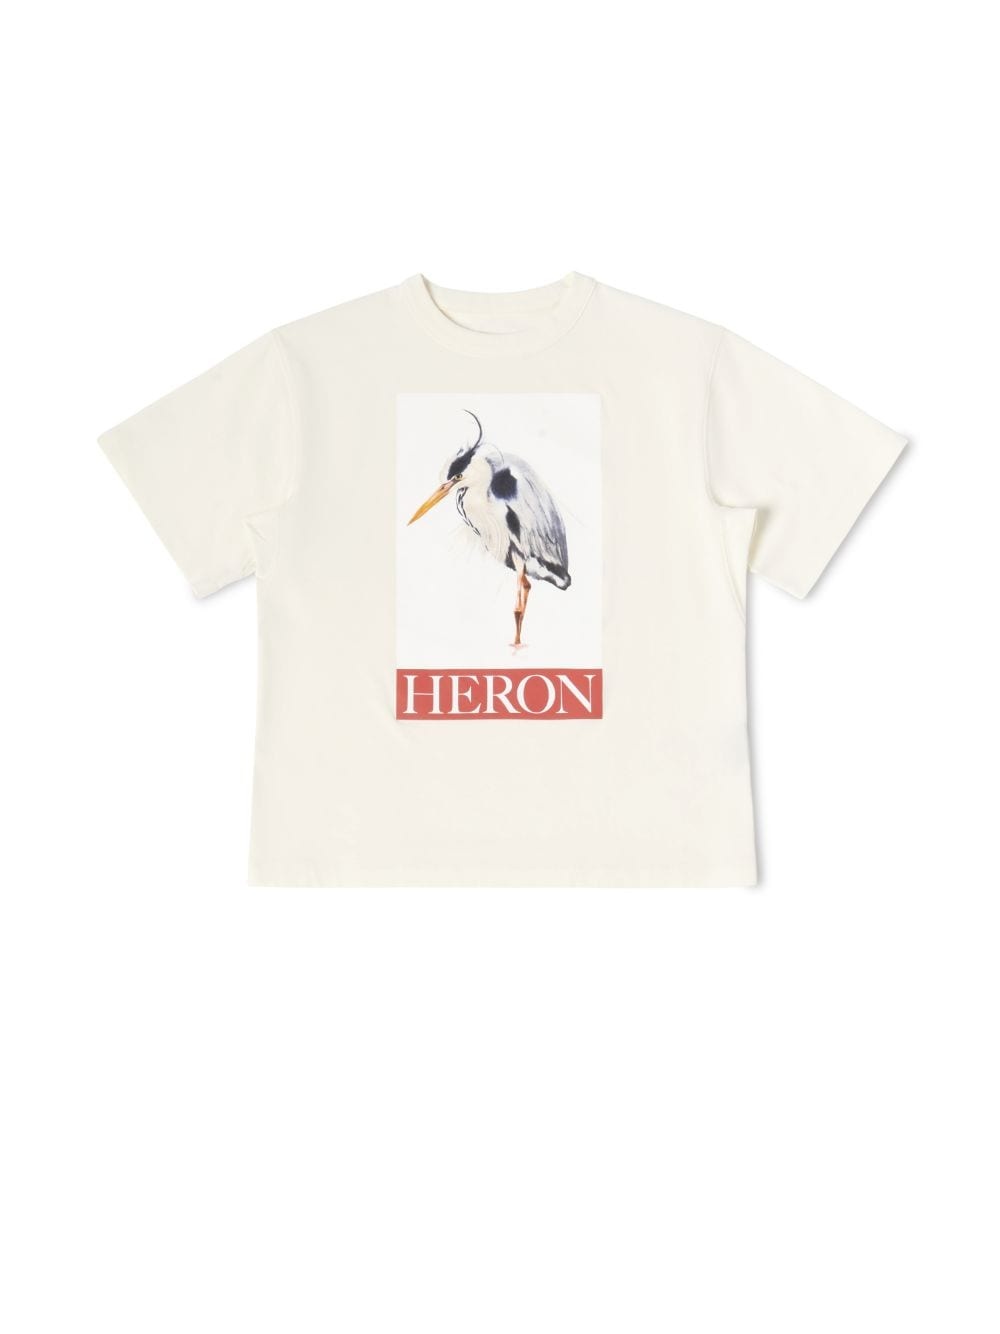 Heron Bird Painted Ss Tee - 1